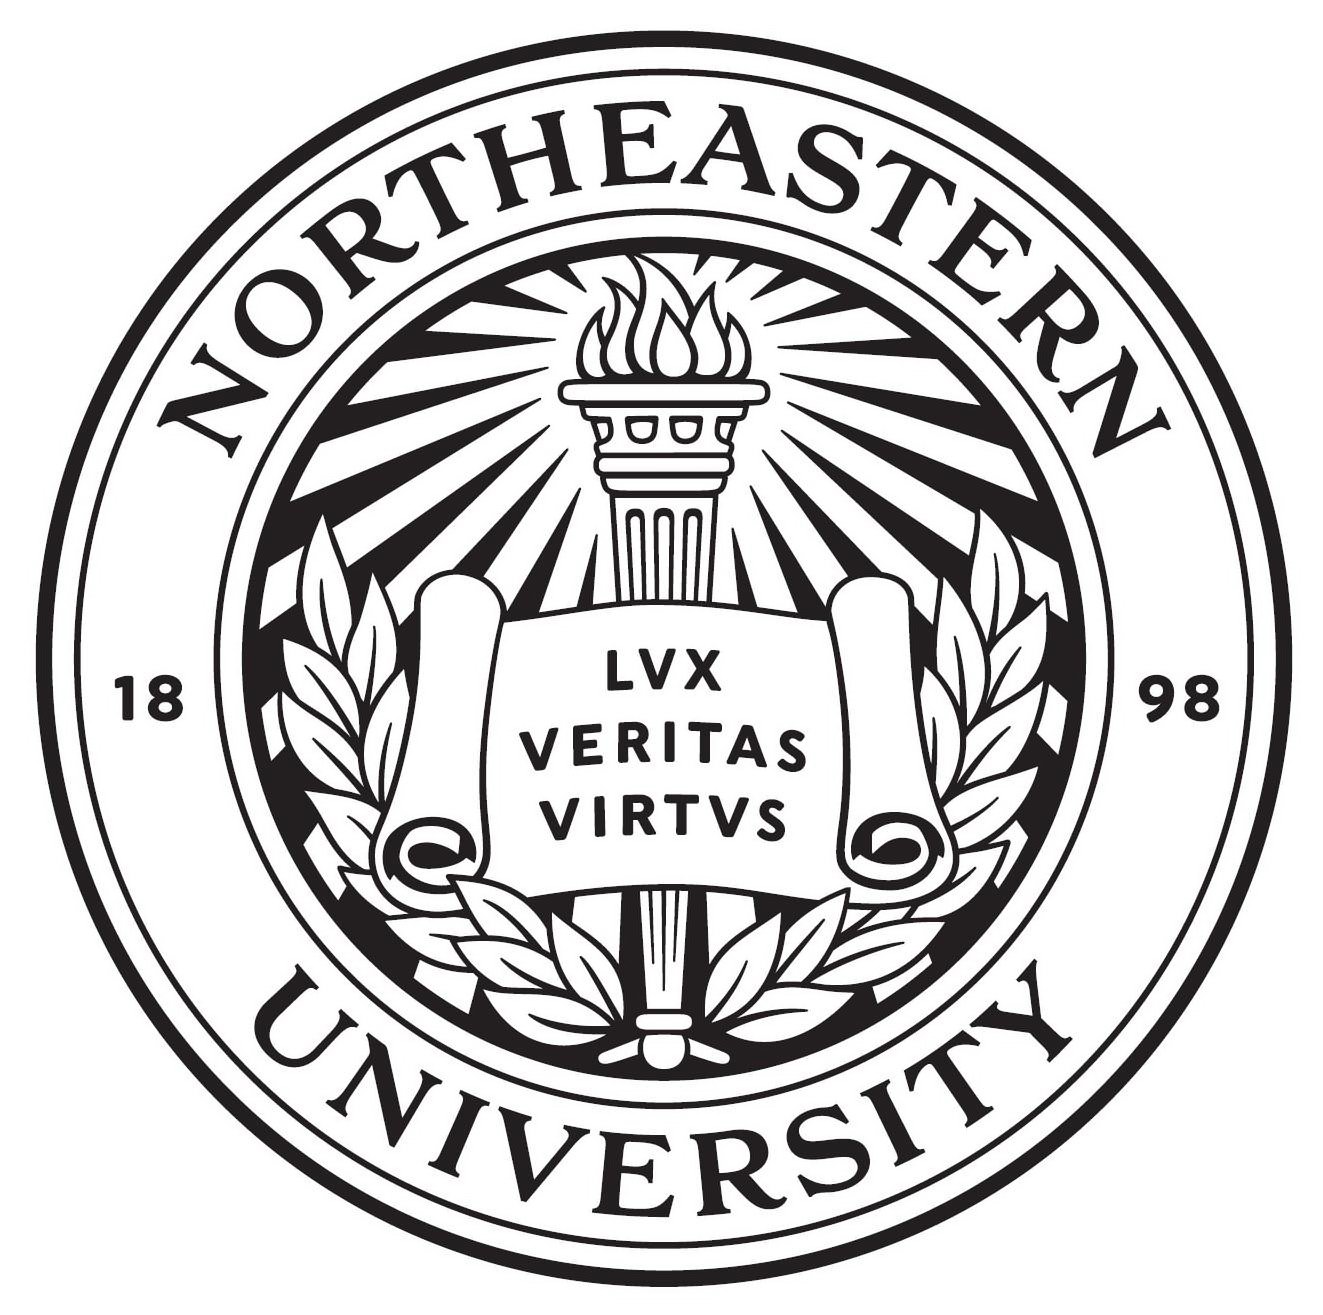  NORTHEASTERN UNIVERSITY 1898 LVX VERITAS VIRTVS